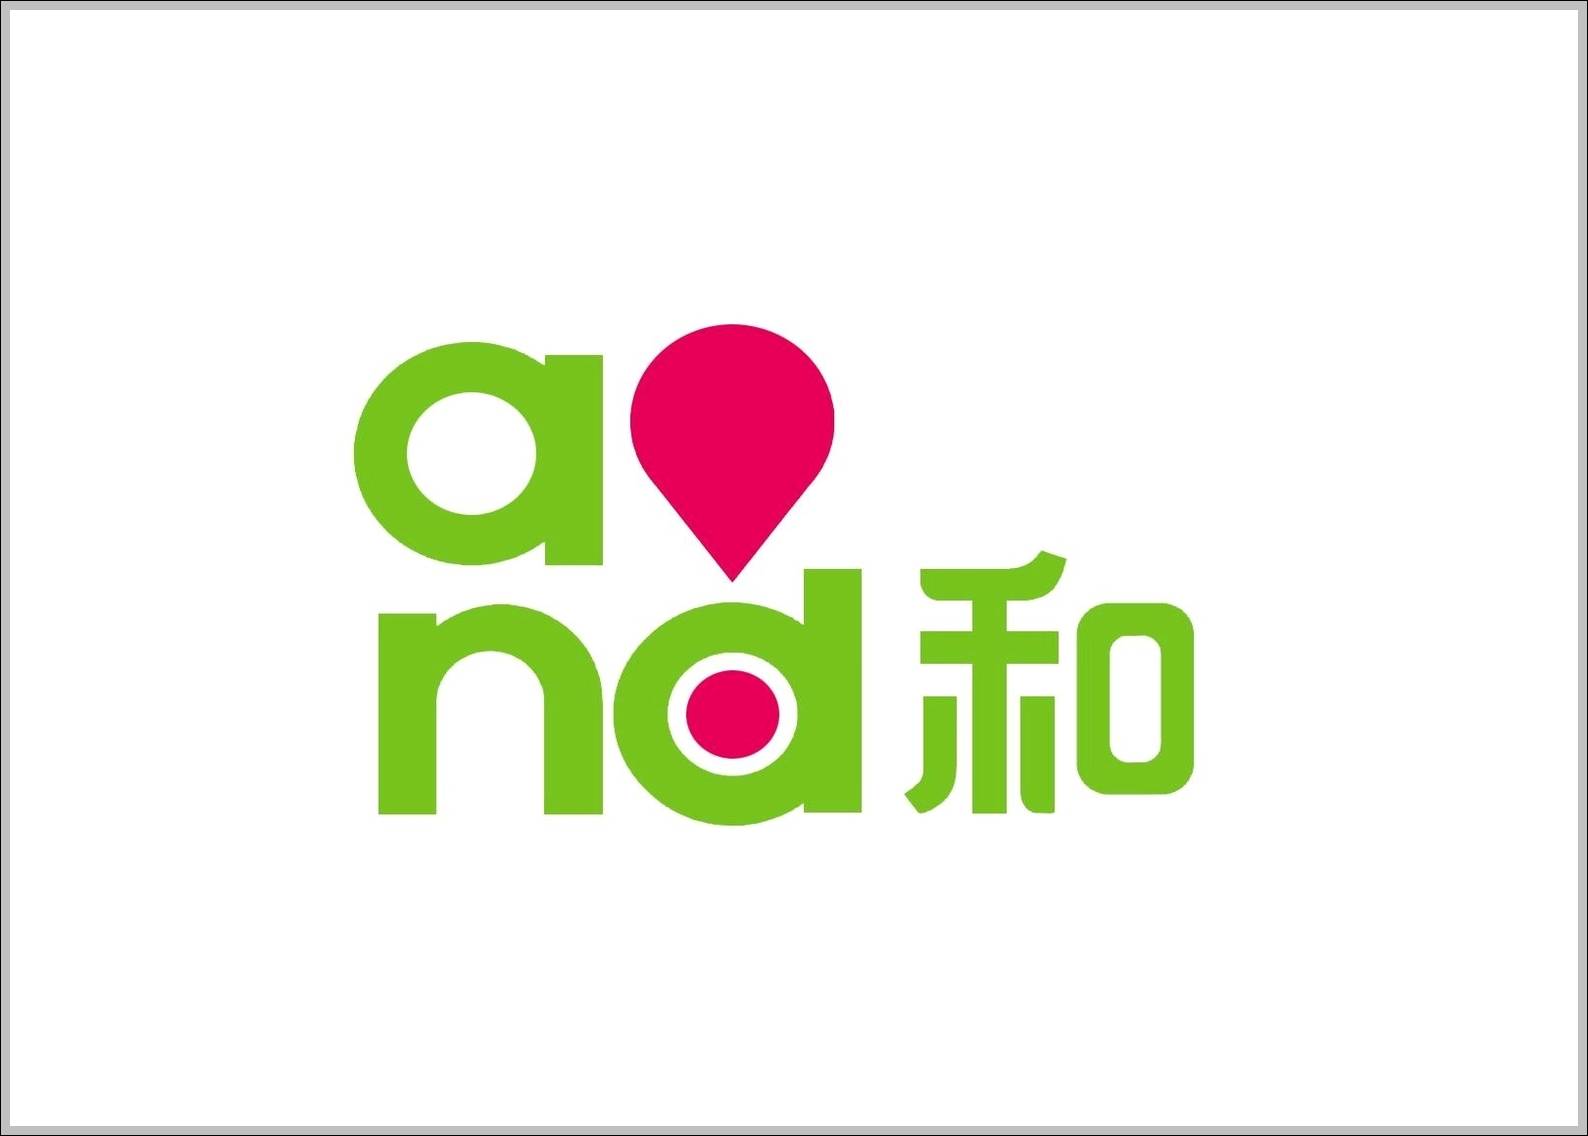 China Mobile Logo - Logos | Logo Sign - Logos, Signs, Symbols, Trademarks of Companies ...